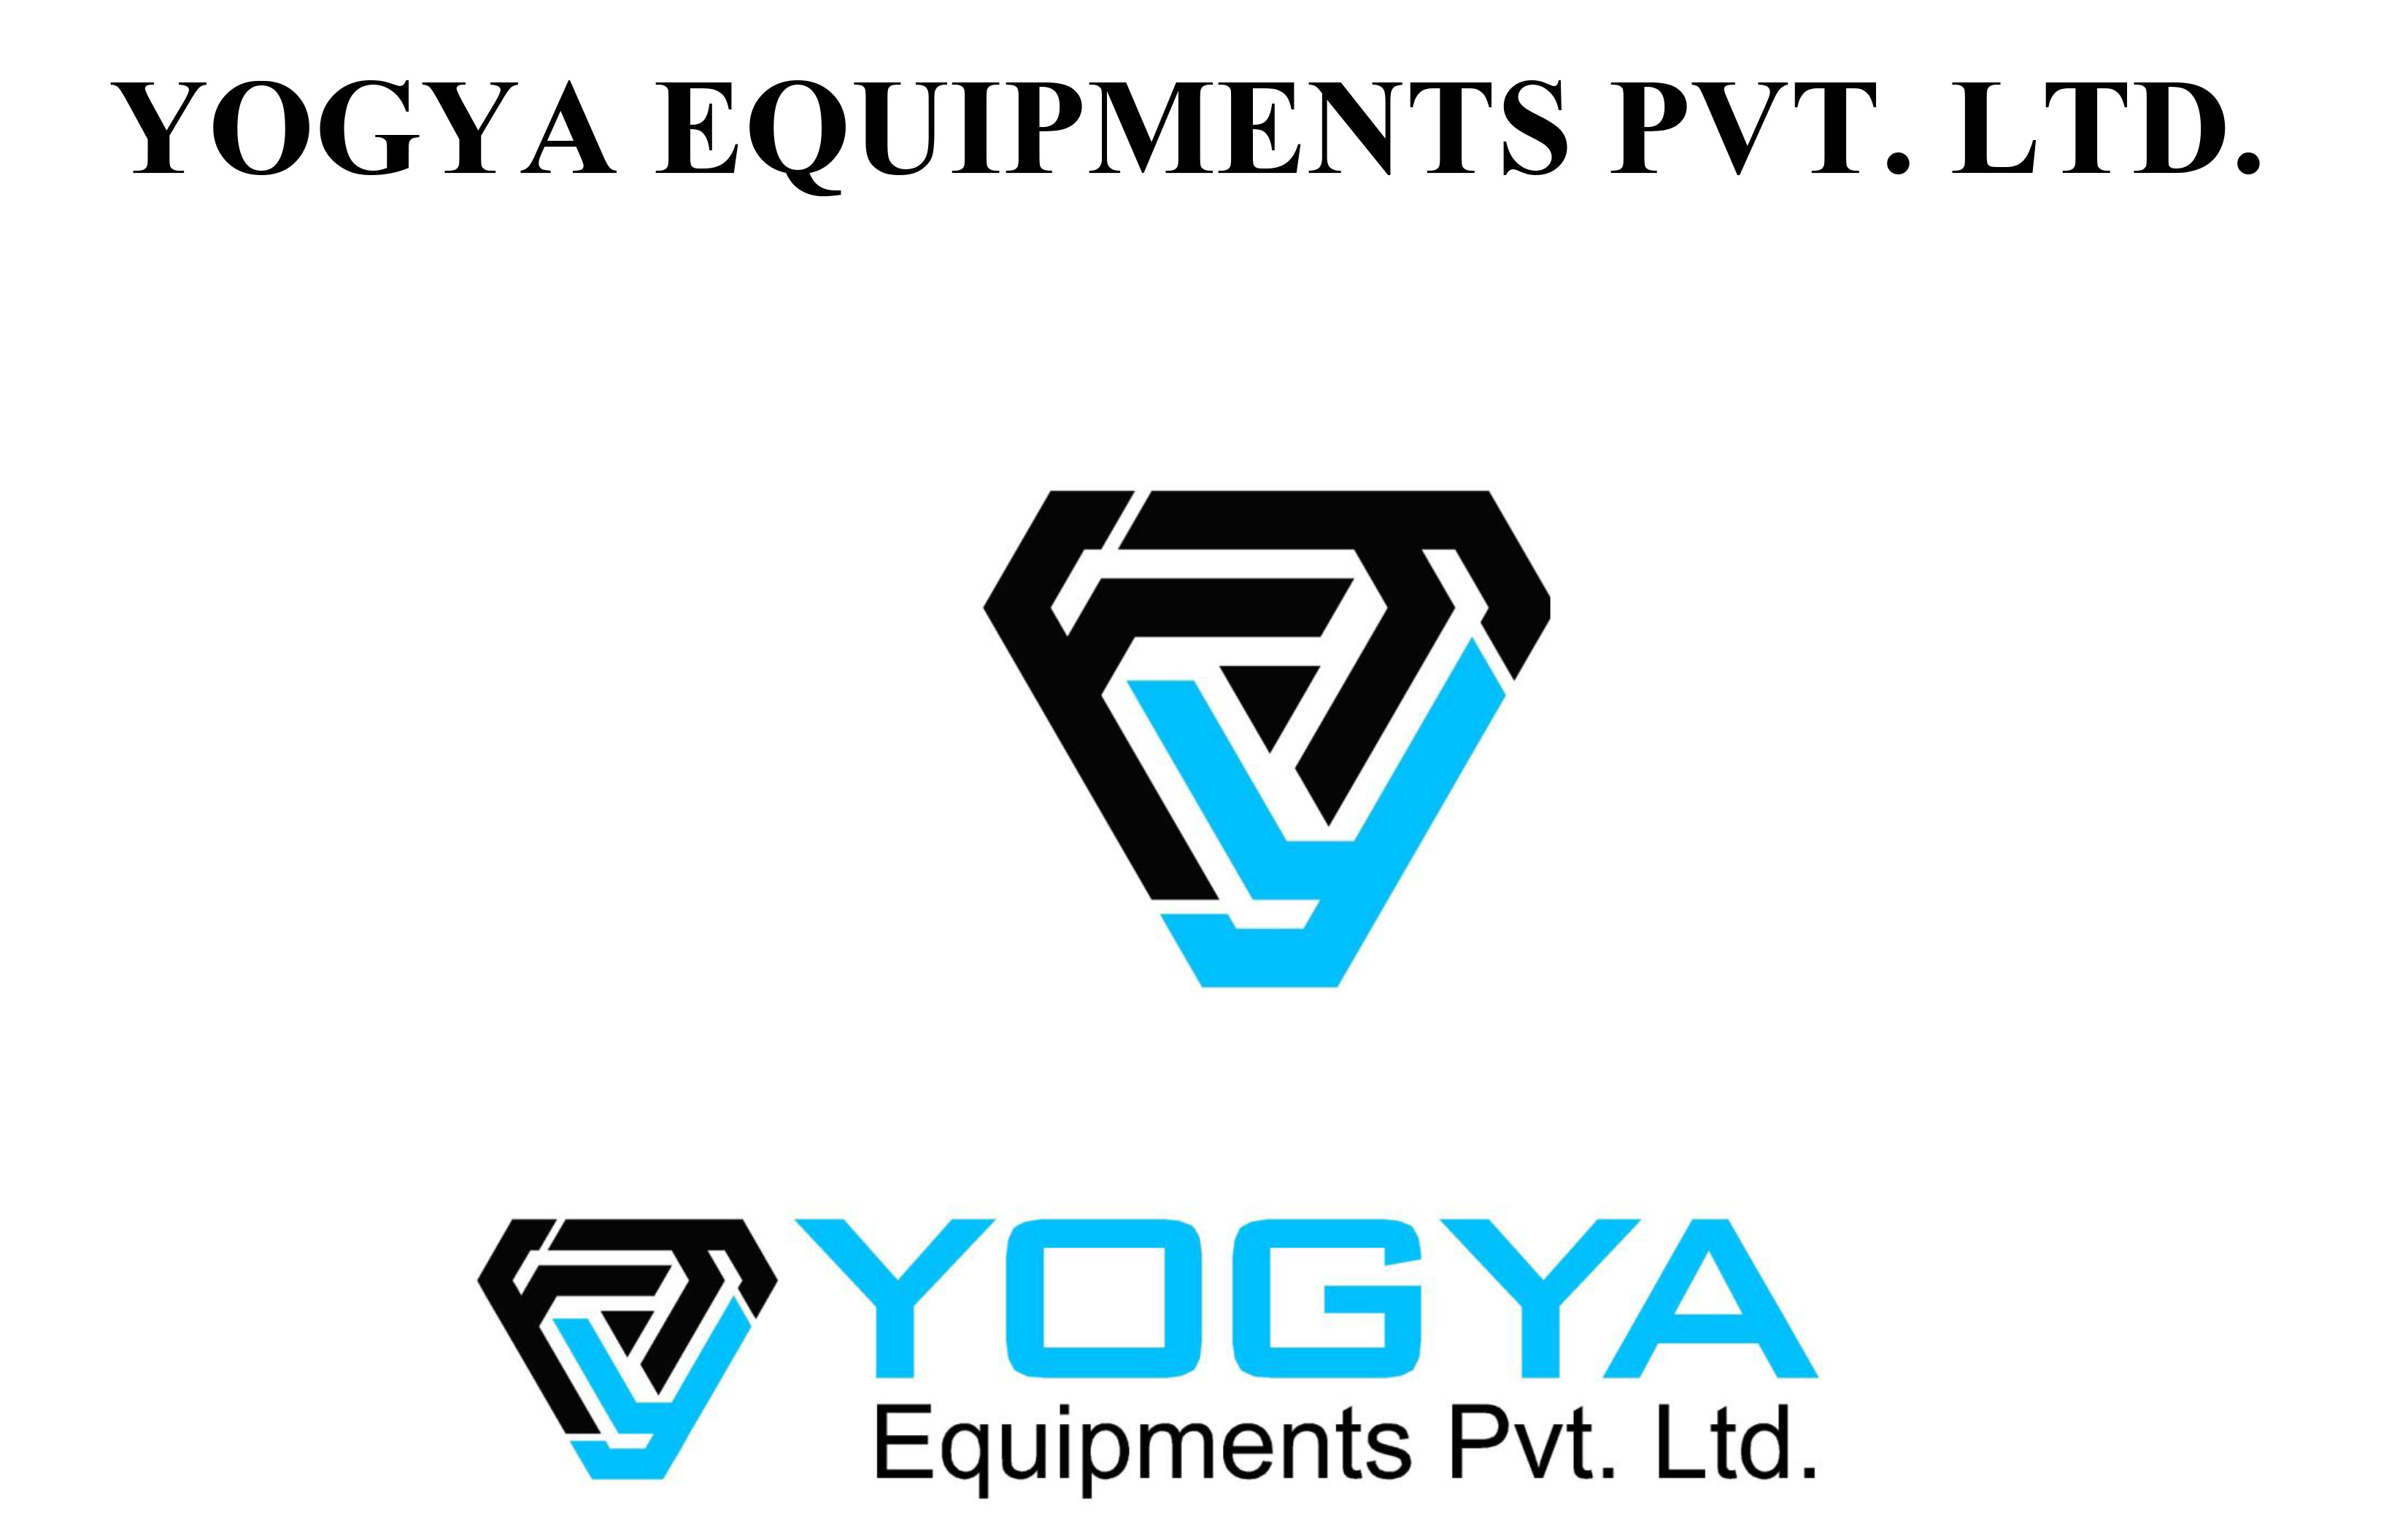 YOGYA EQUIPMENTS PVT LTD